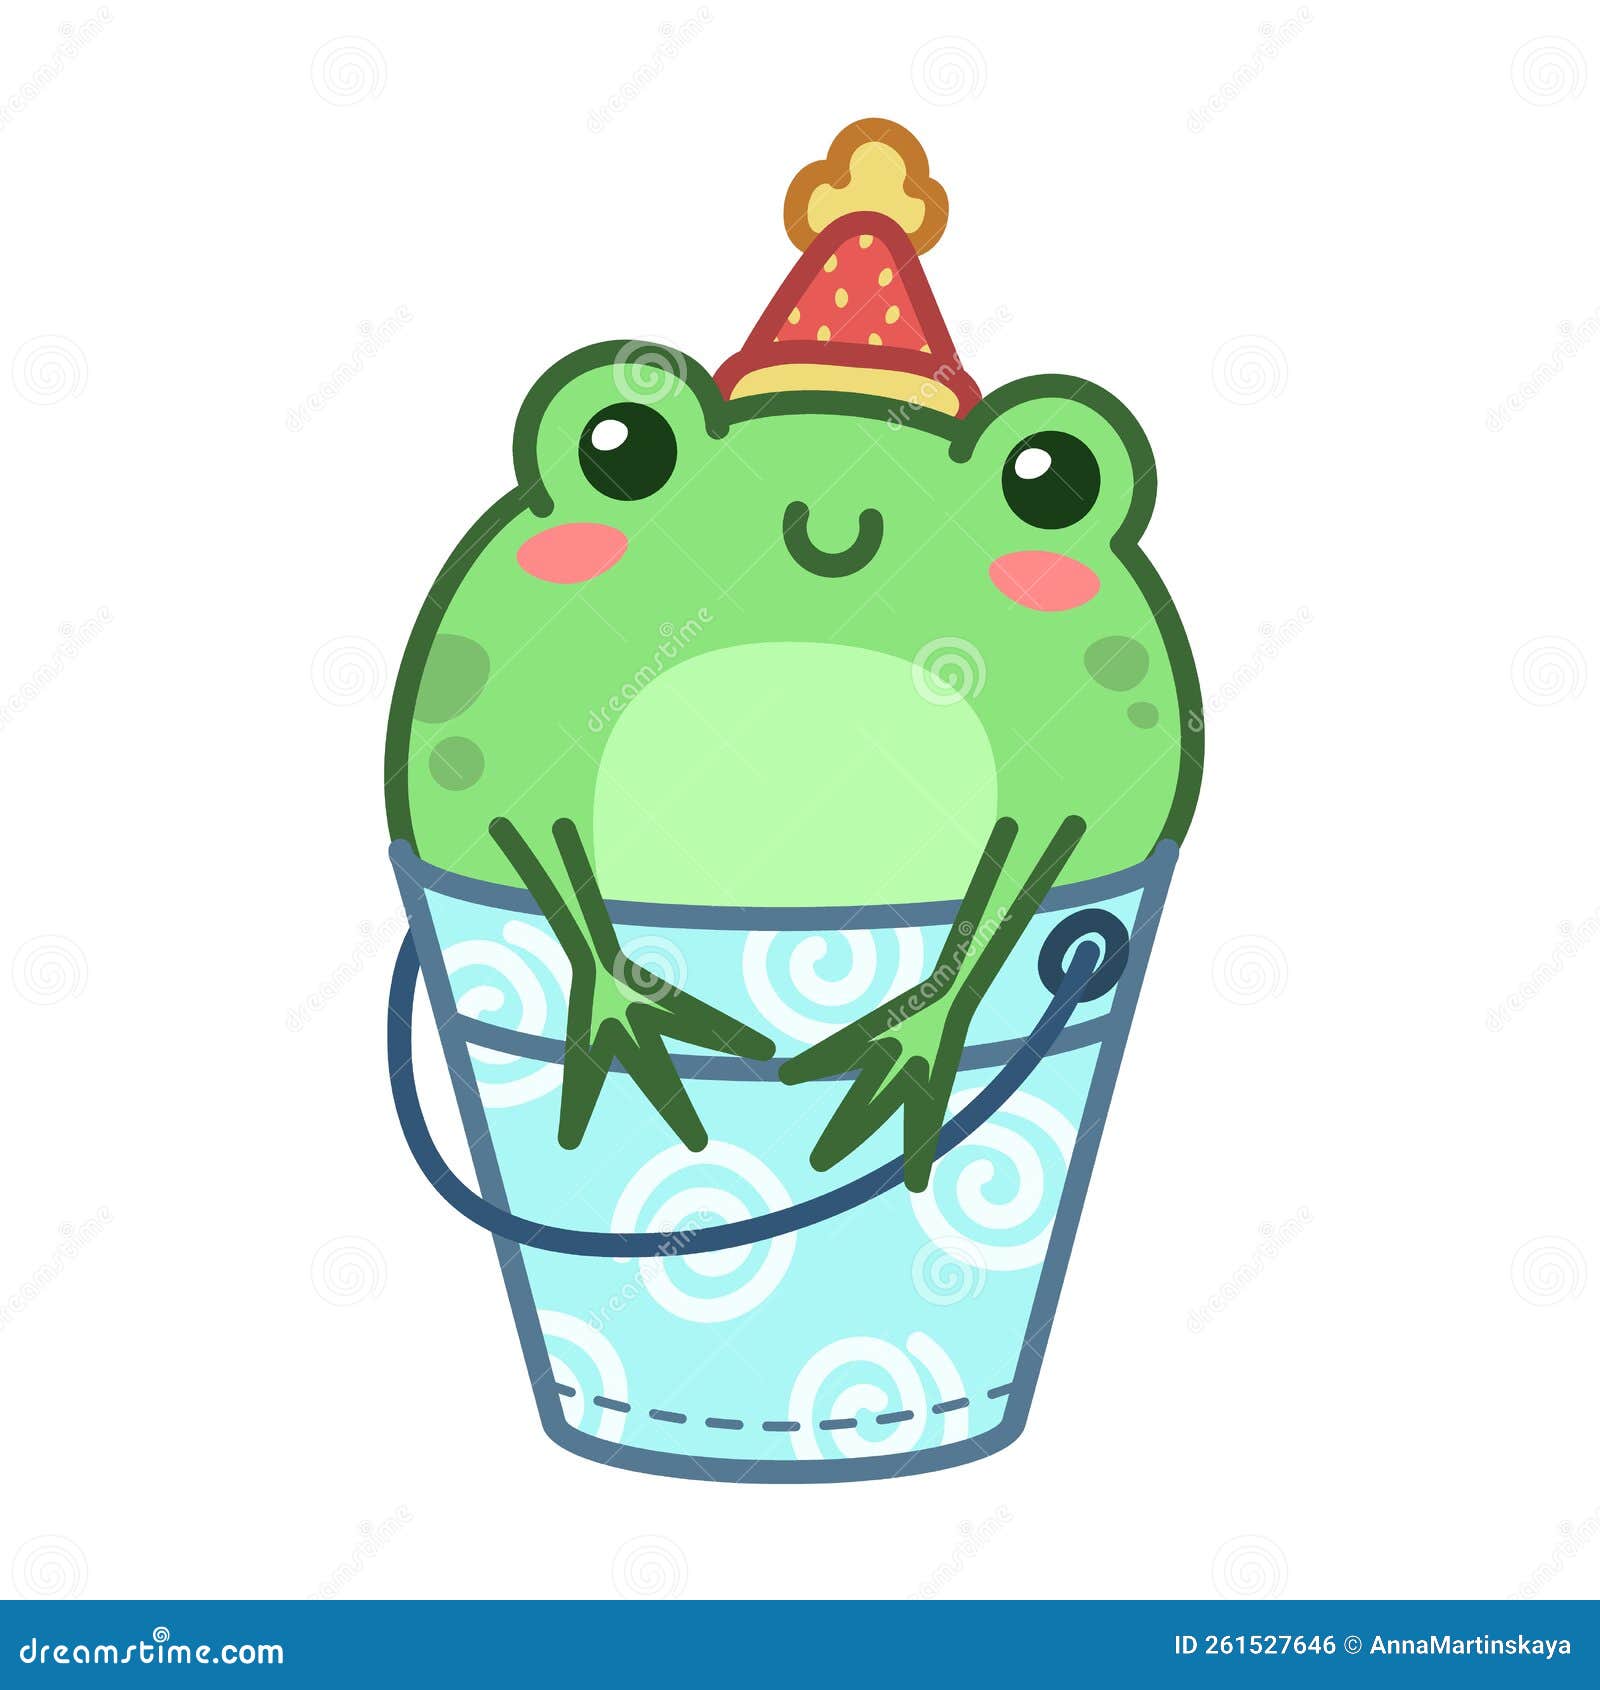 https://thumbs.dreamstime.com/z/kawaii-frog-sitting-bucket-cute-cartoon-character-designs-colorful-vector-illustration-isolated-kawaii-frog-sitting-261527646.jpg